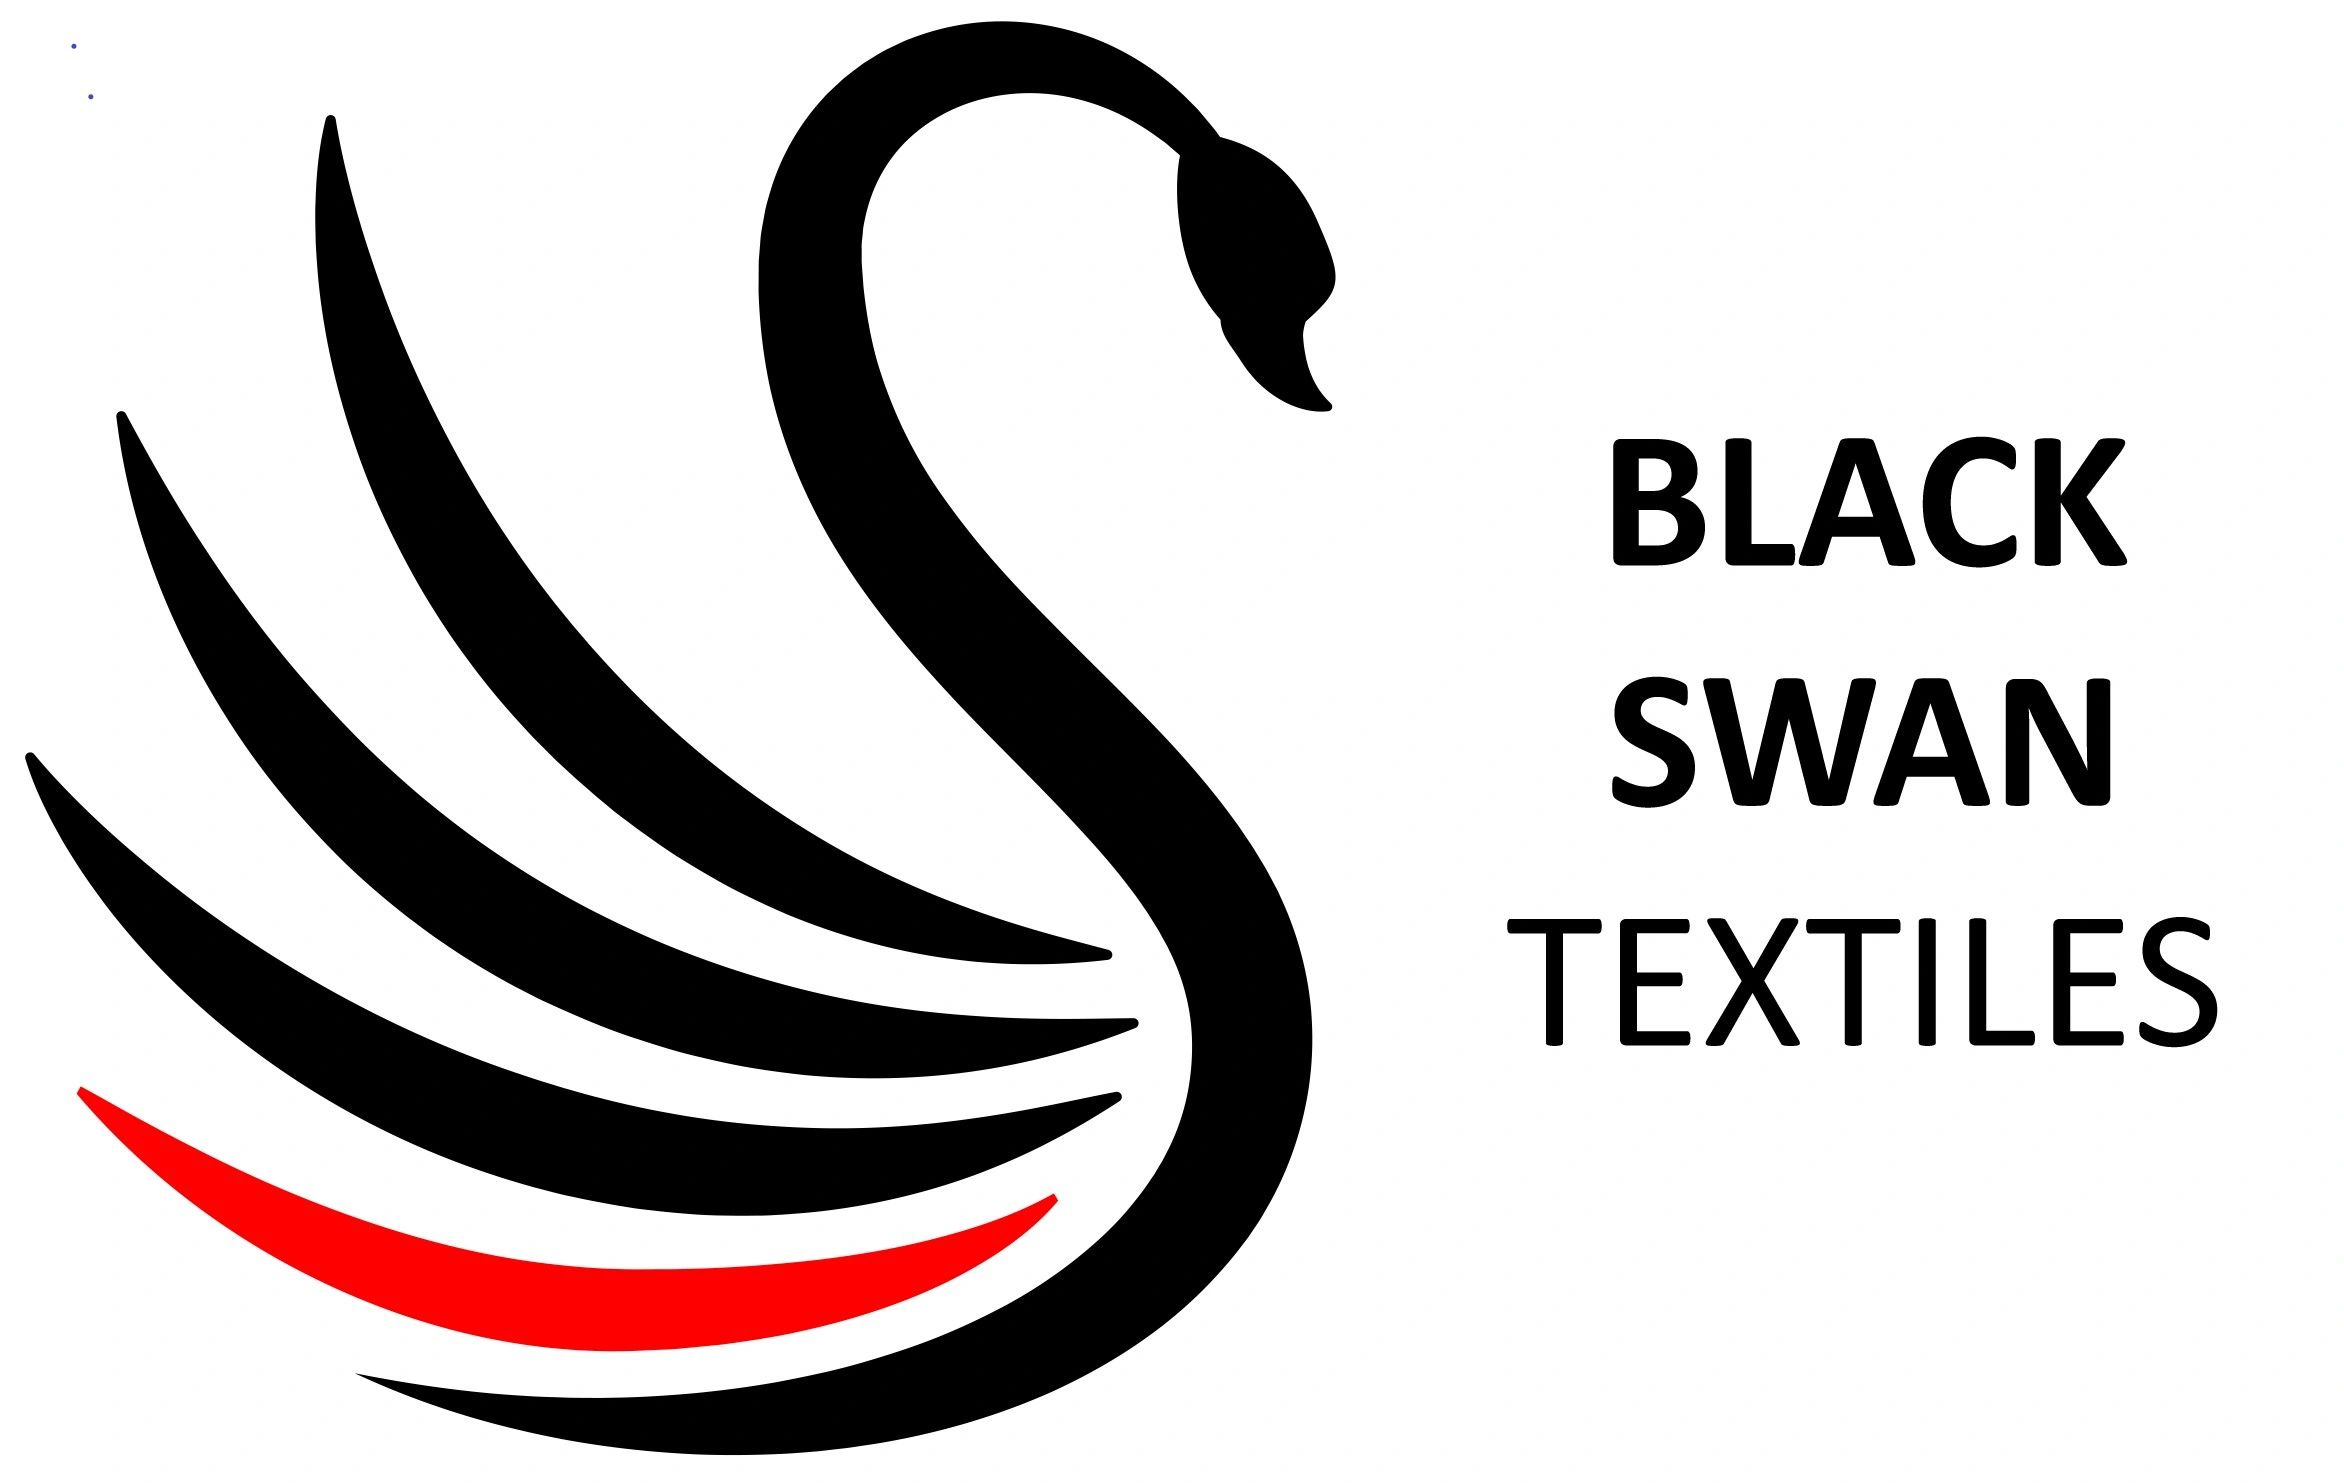 Black Swan Textiles logo